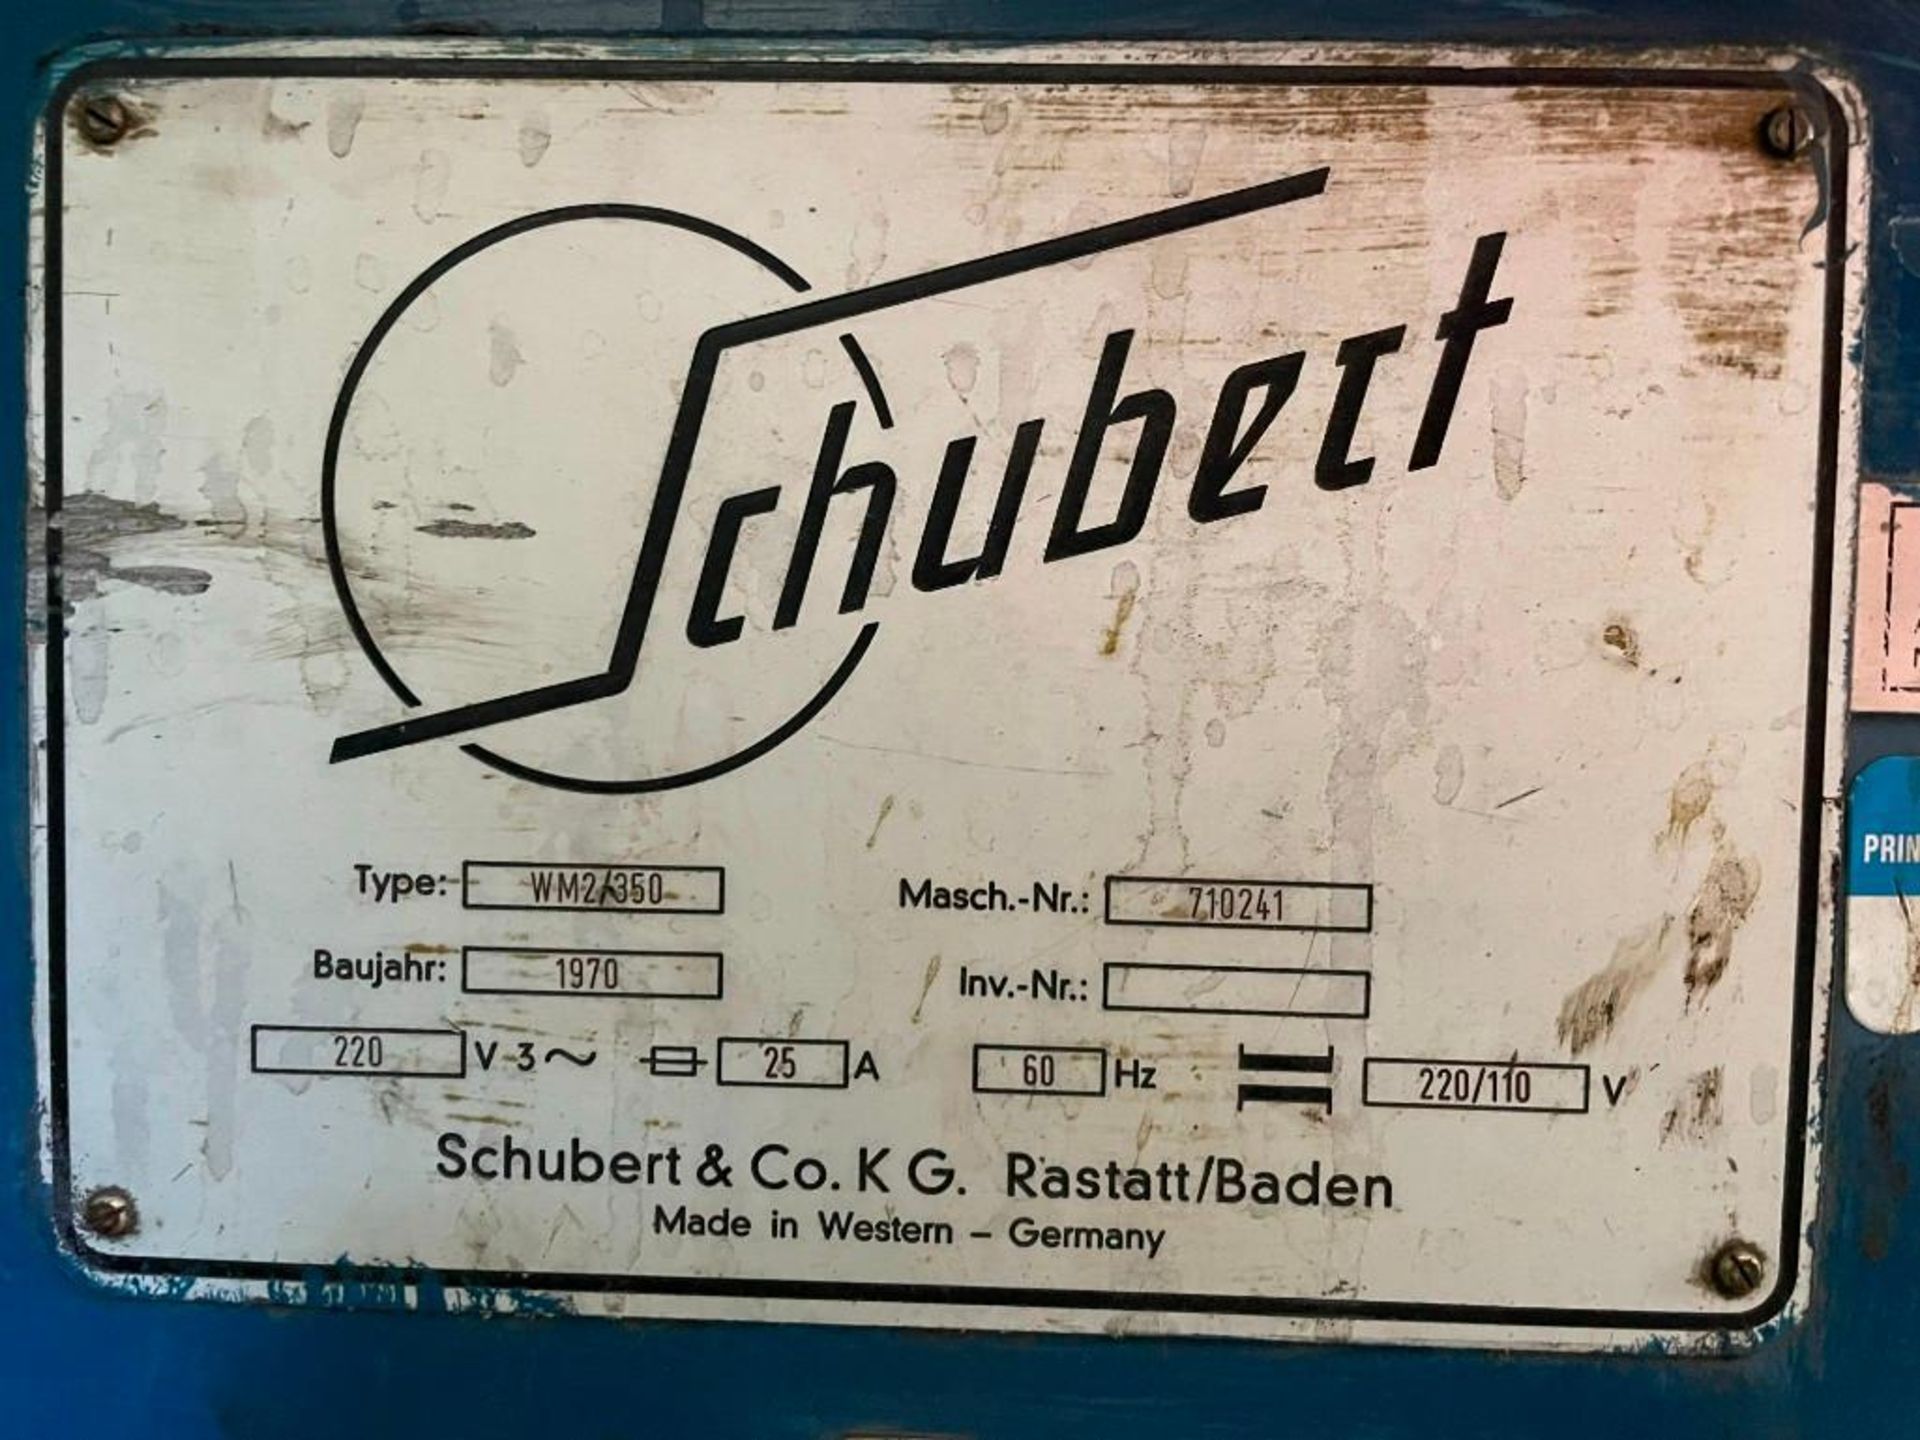 Schubert 13” Power Stock Straightener Model WM2-350 - Image 3 of 4